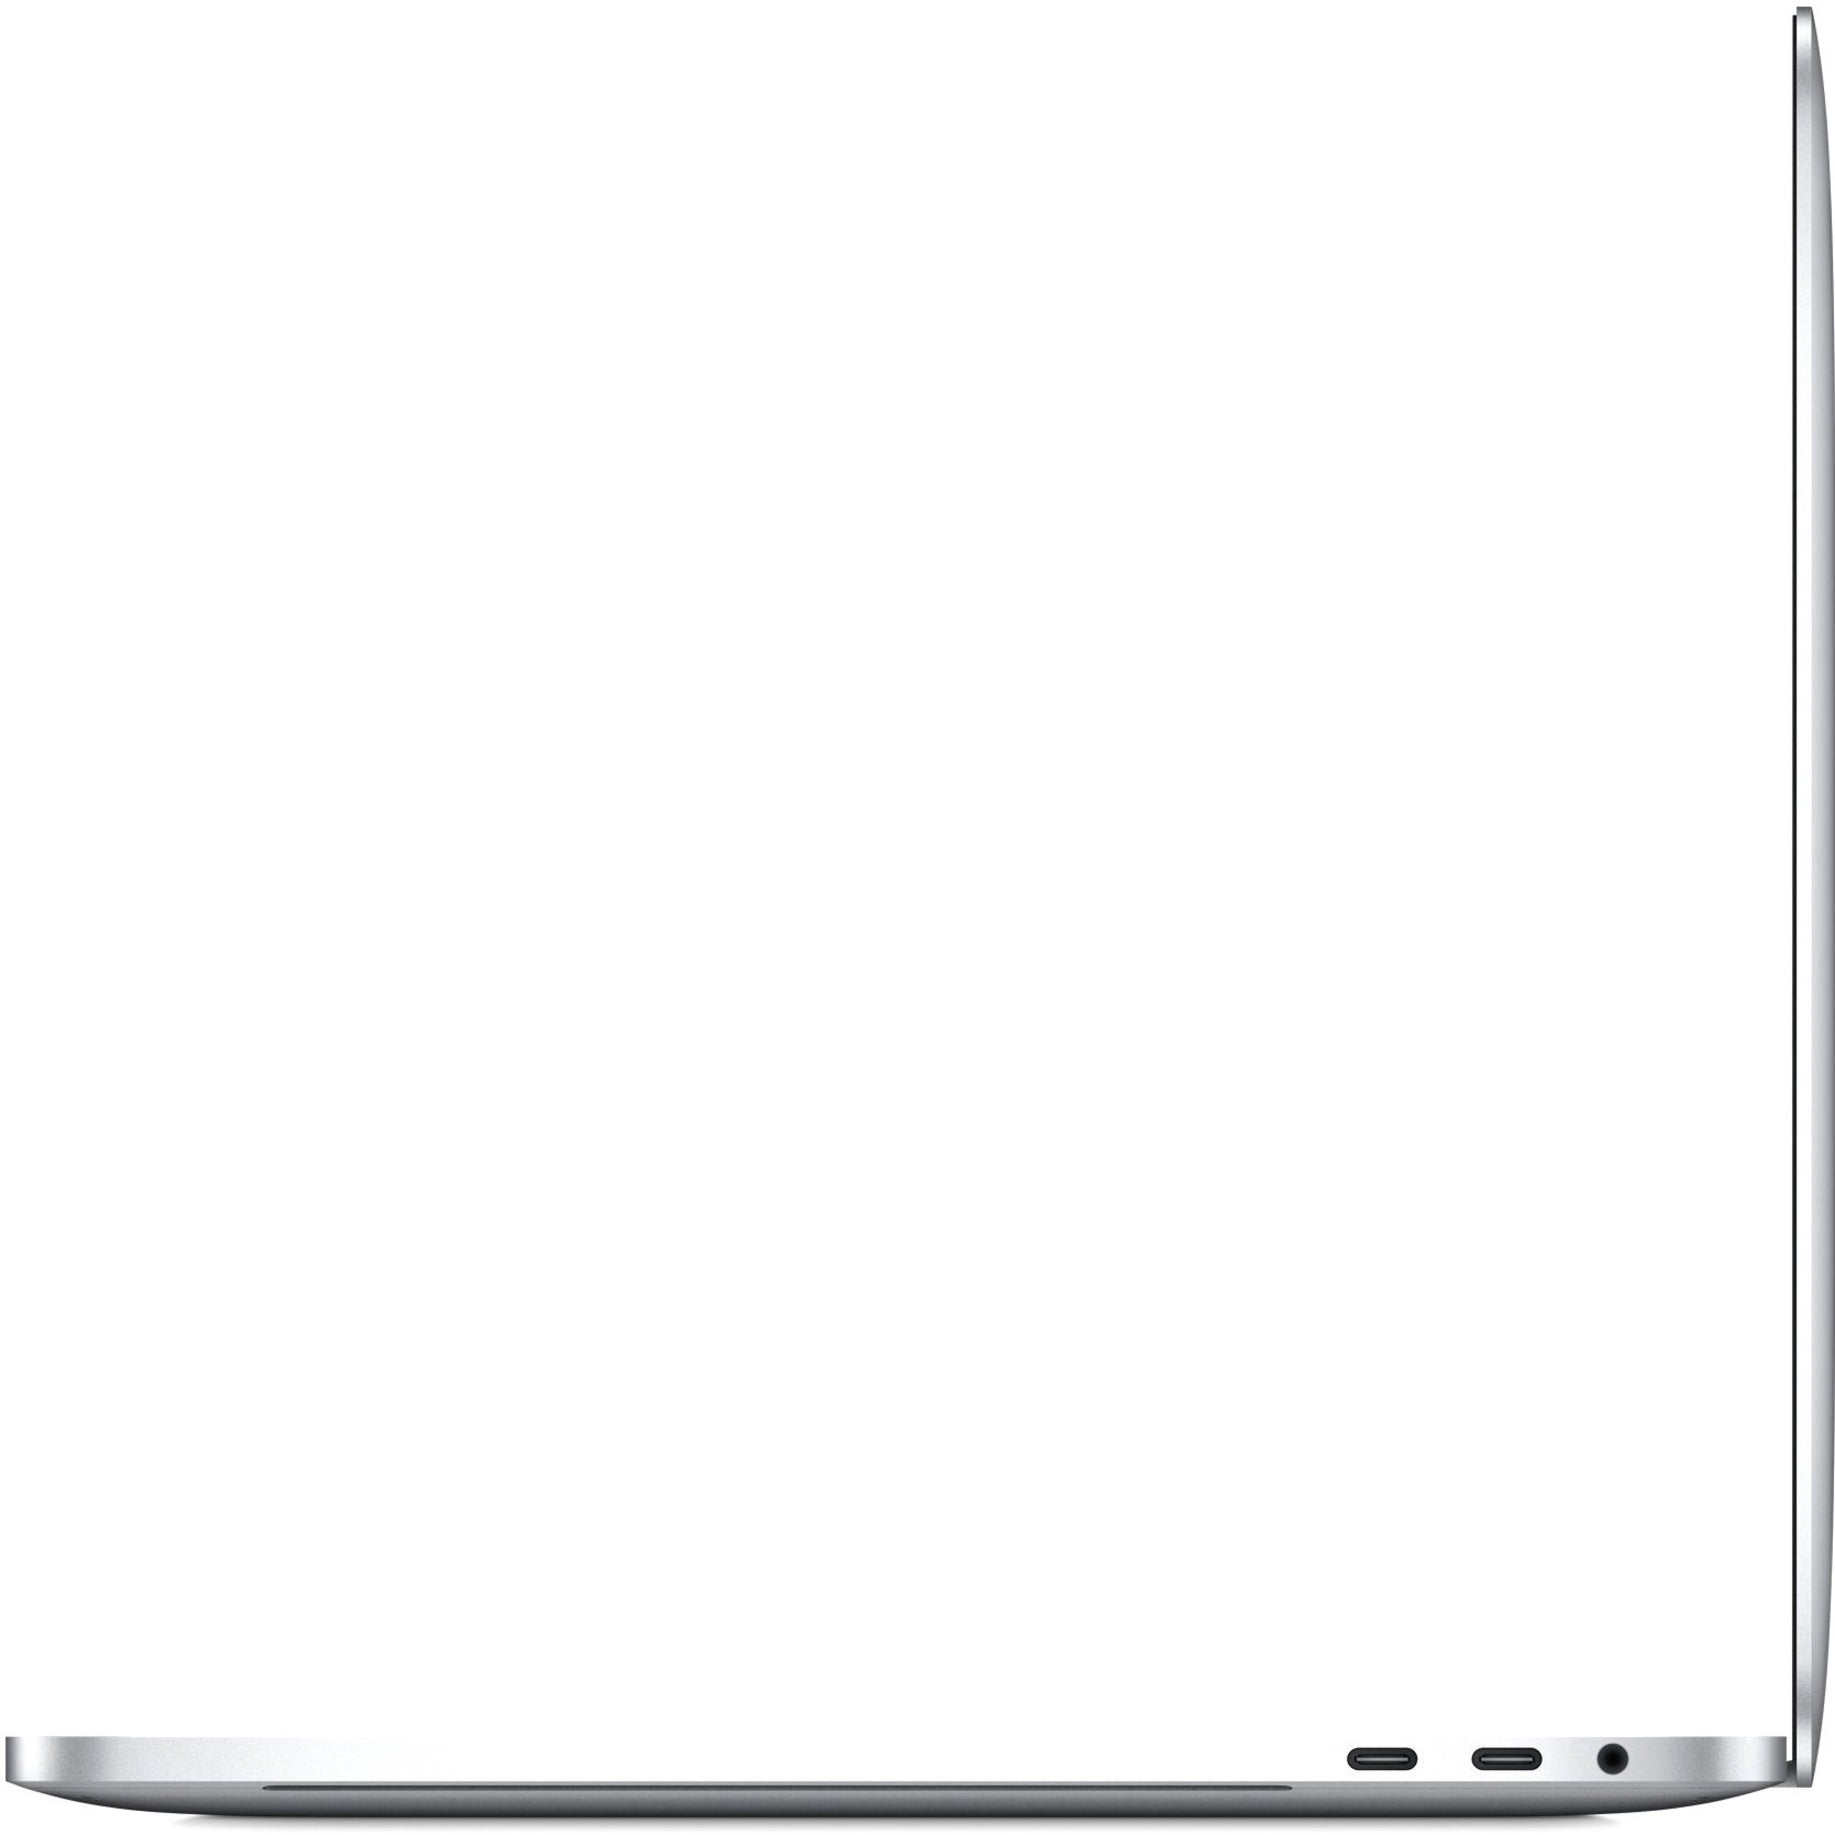 Apple MR972LL/A 15-inch MacBook Pro - Silver, 2.6GHz, 16GB RAM, 512GB SSD, Radeon Pro 560X, 10 Hours Battery